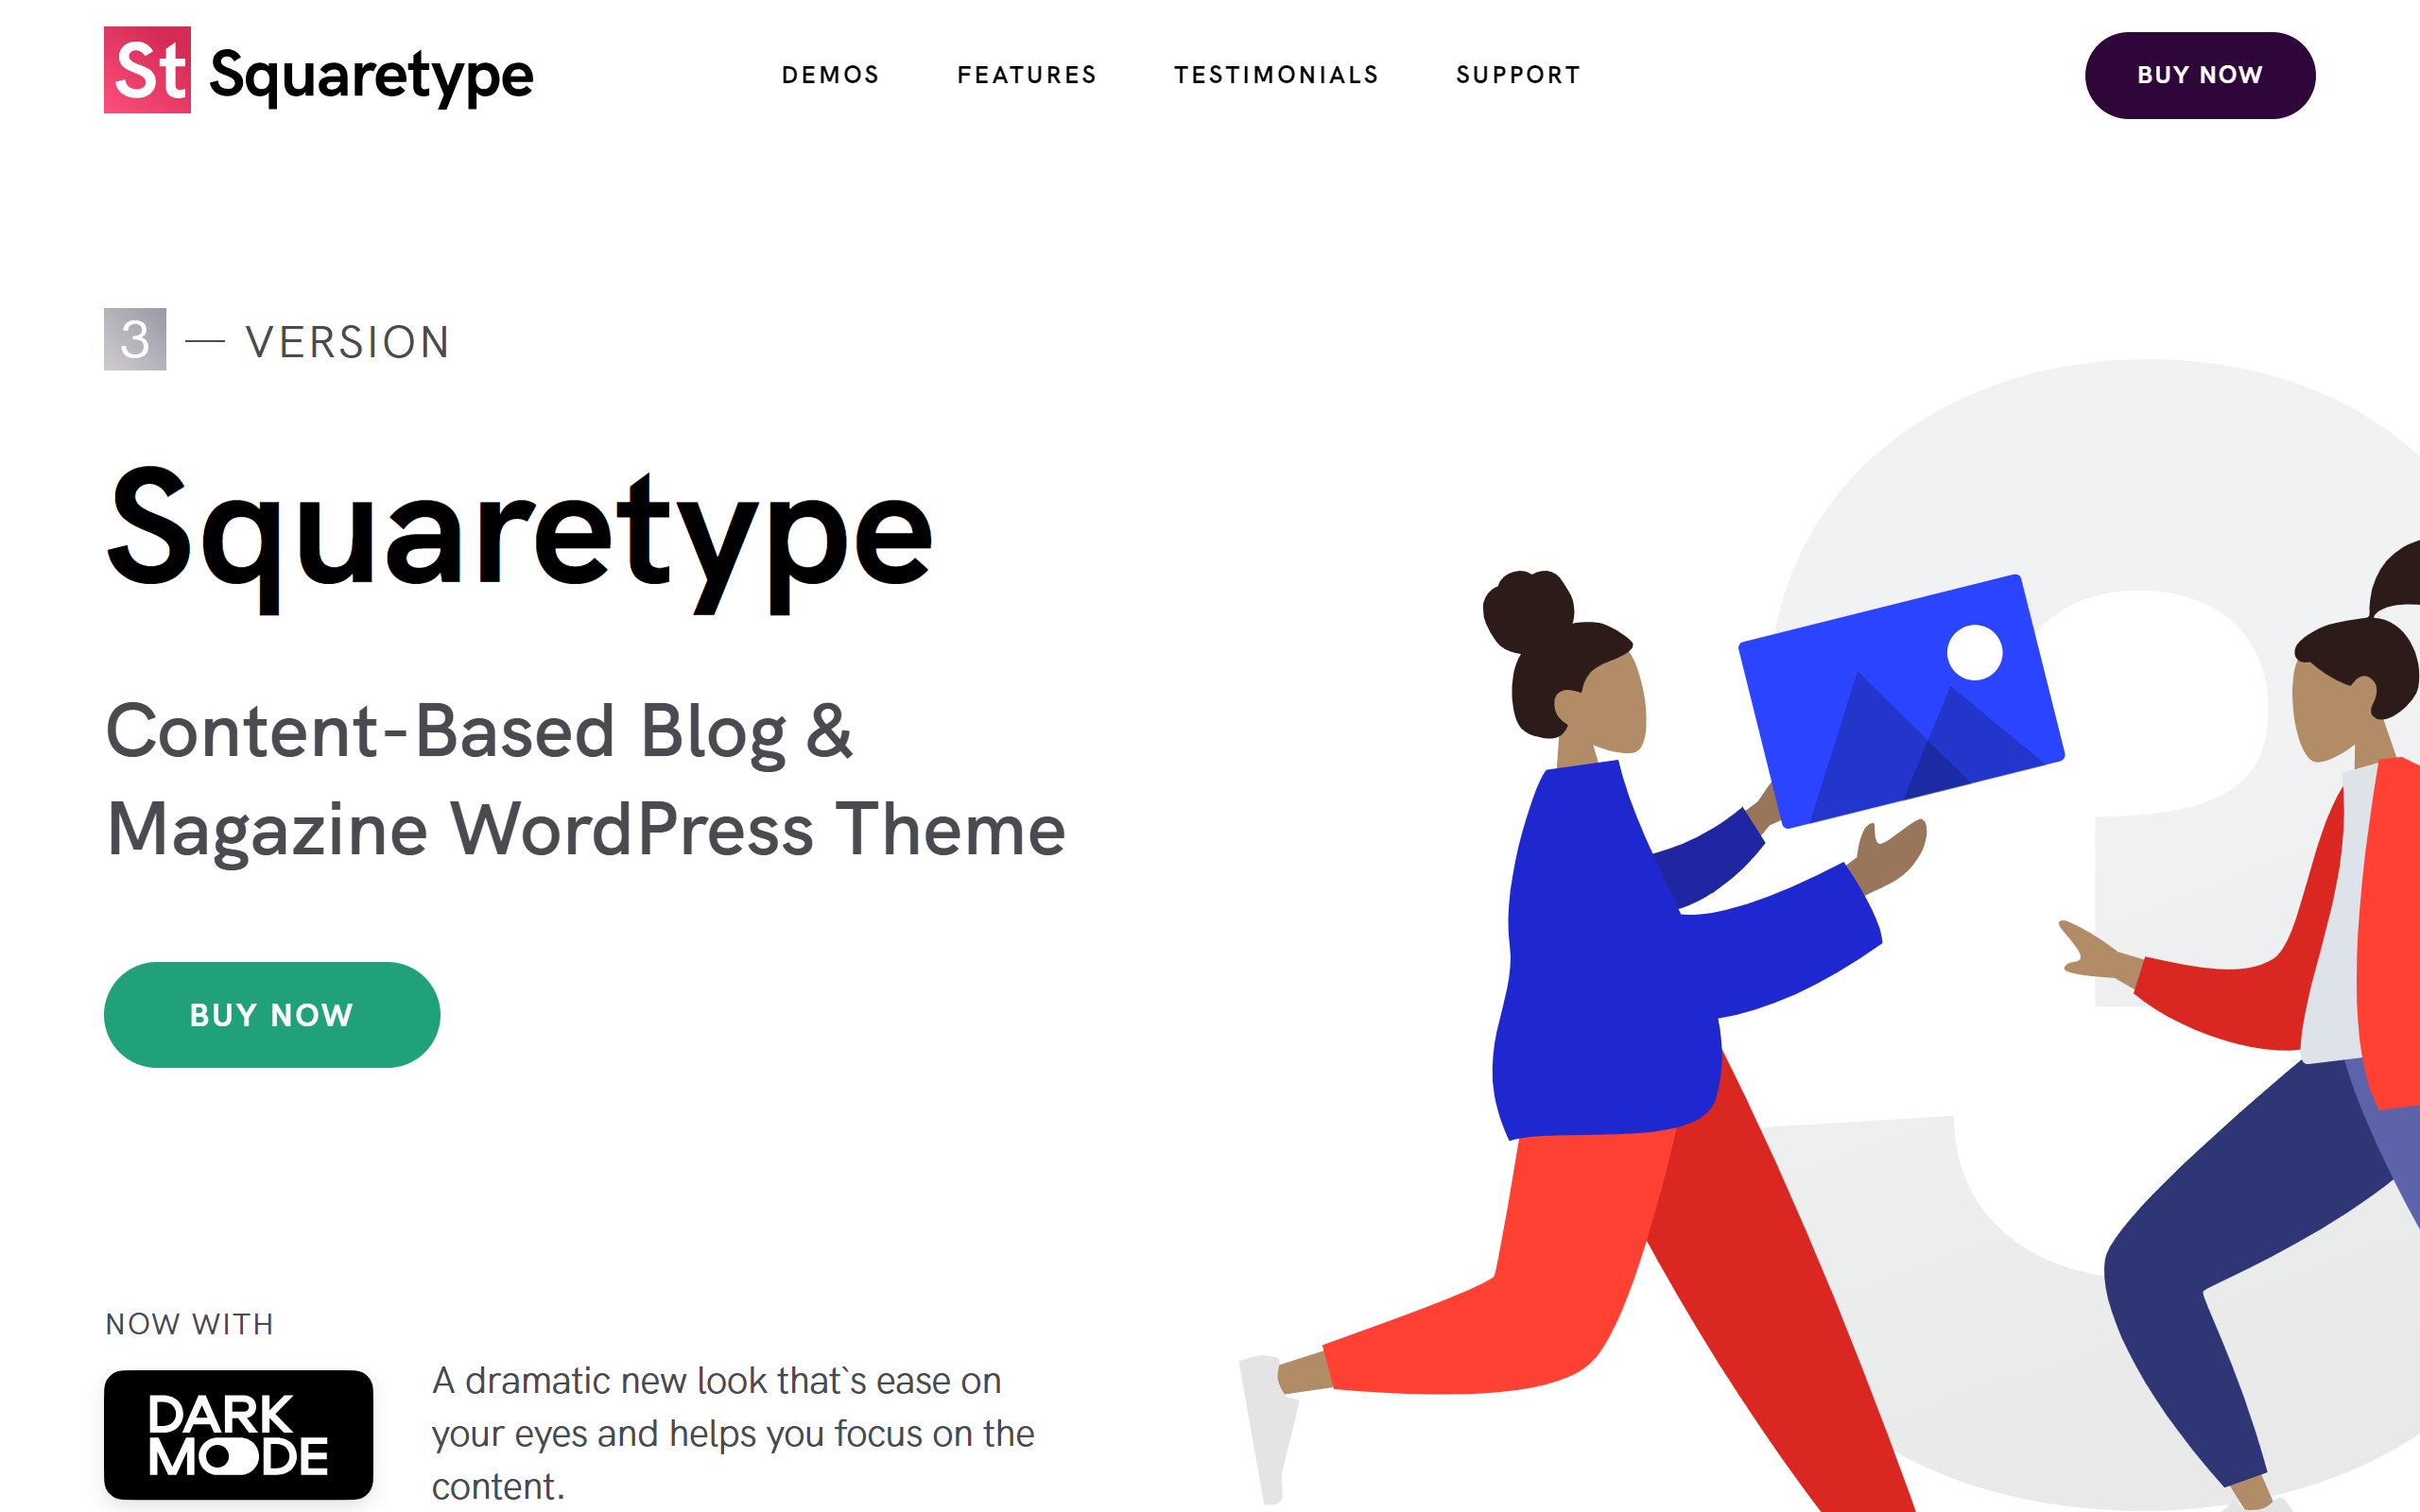 Squaretype minimalist WordPress theme